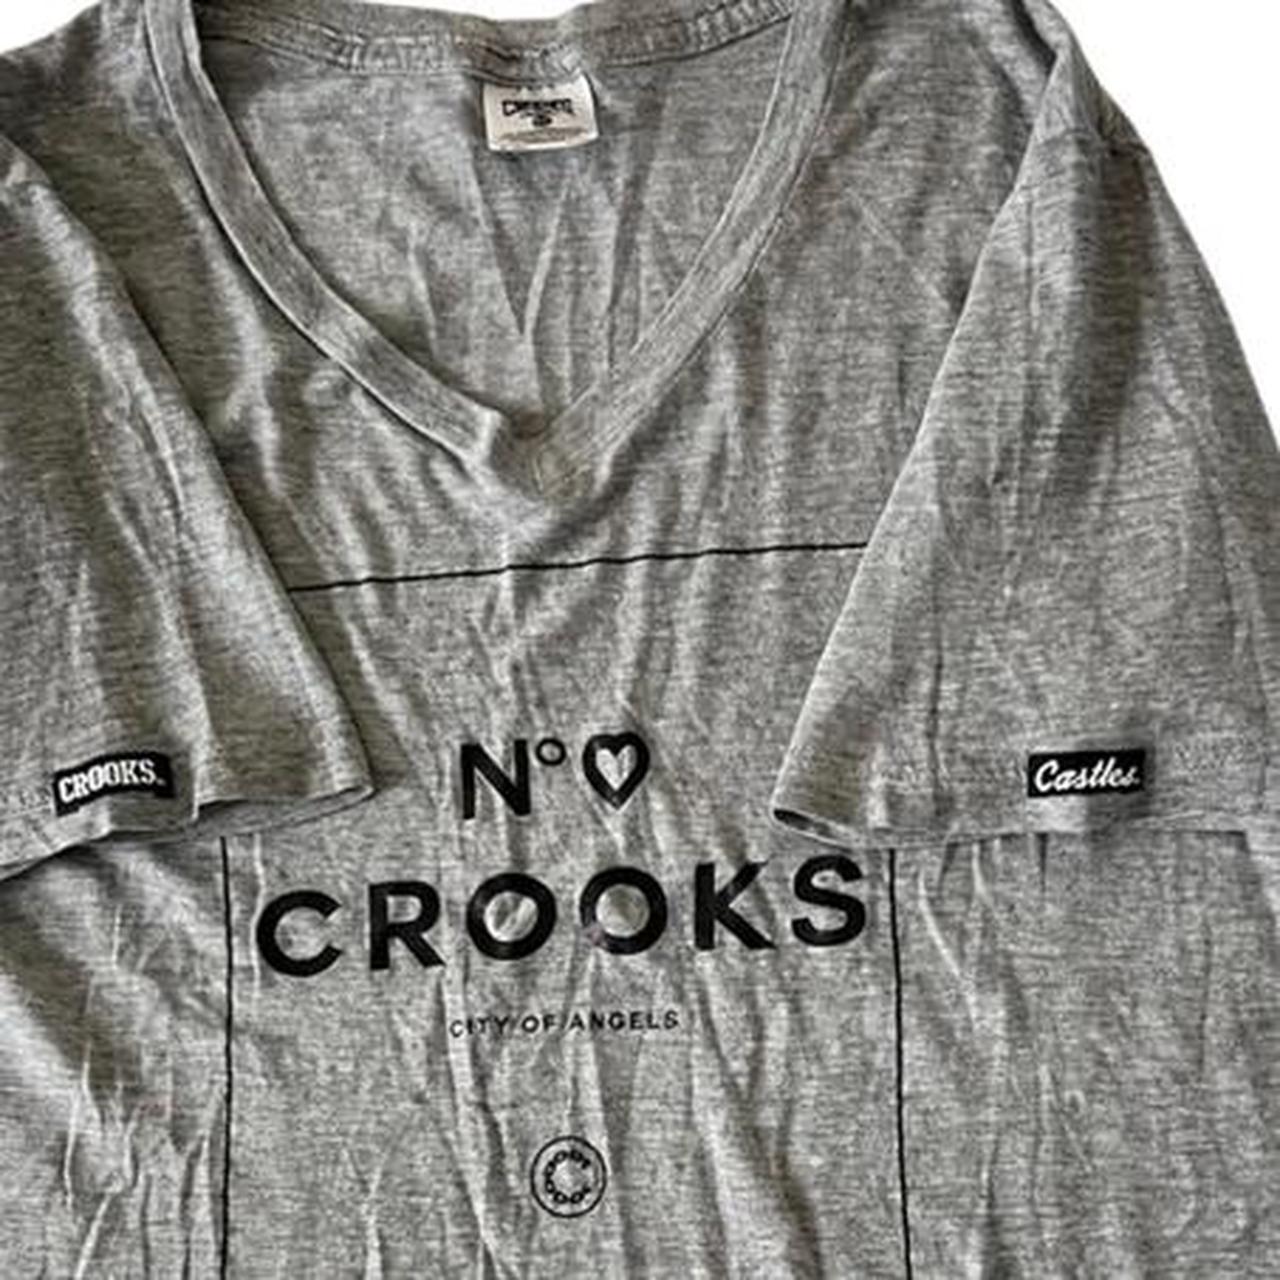 Crooks & Castles Women's Grey and Black T-shirt (4)